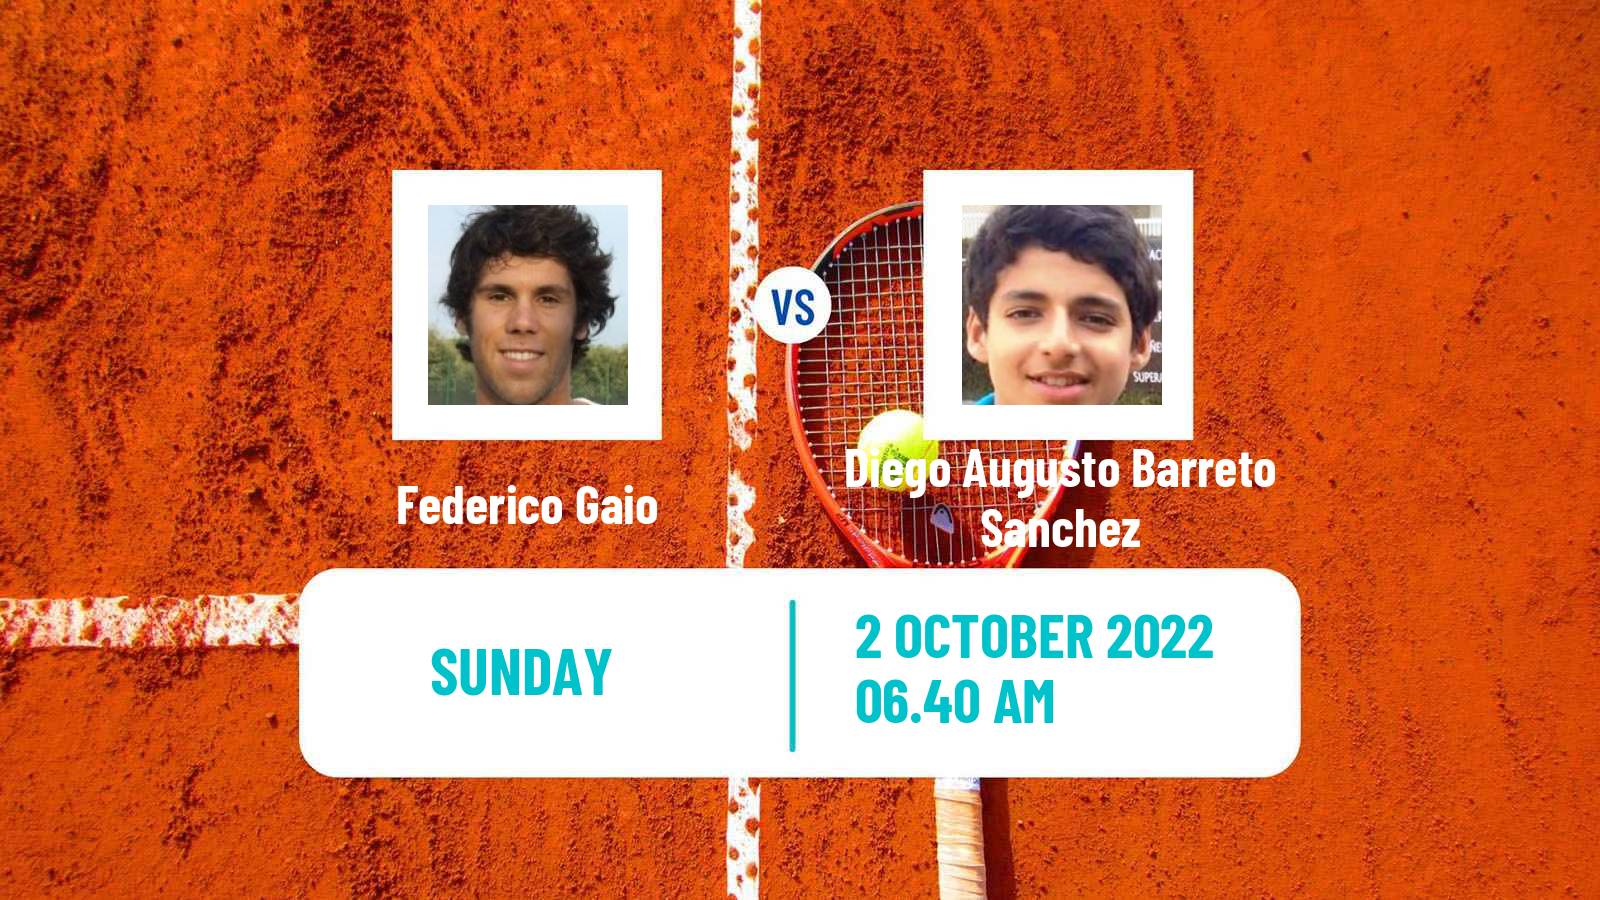 Tennis ATP Challenger Federico Gaio - Diego Augusto Barreto Sanchez